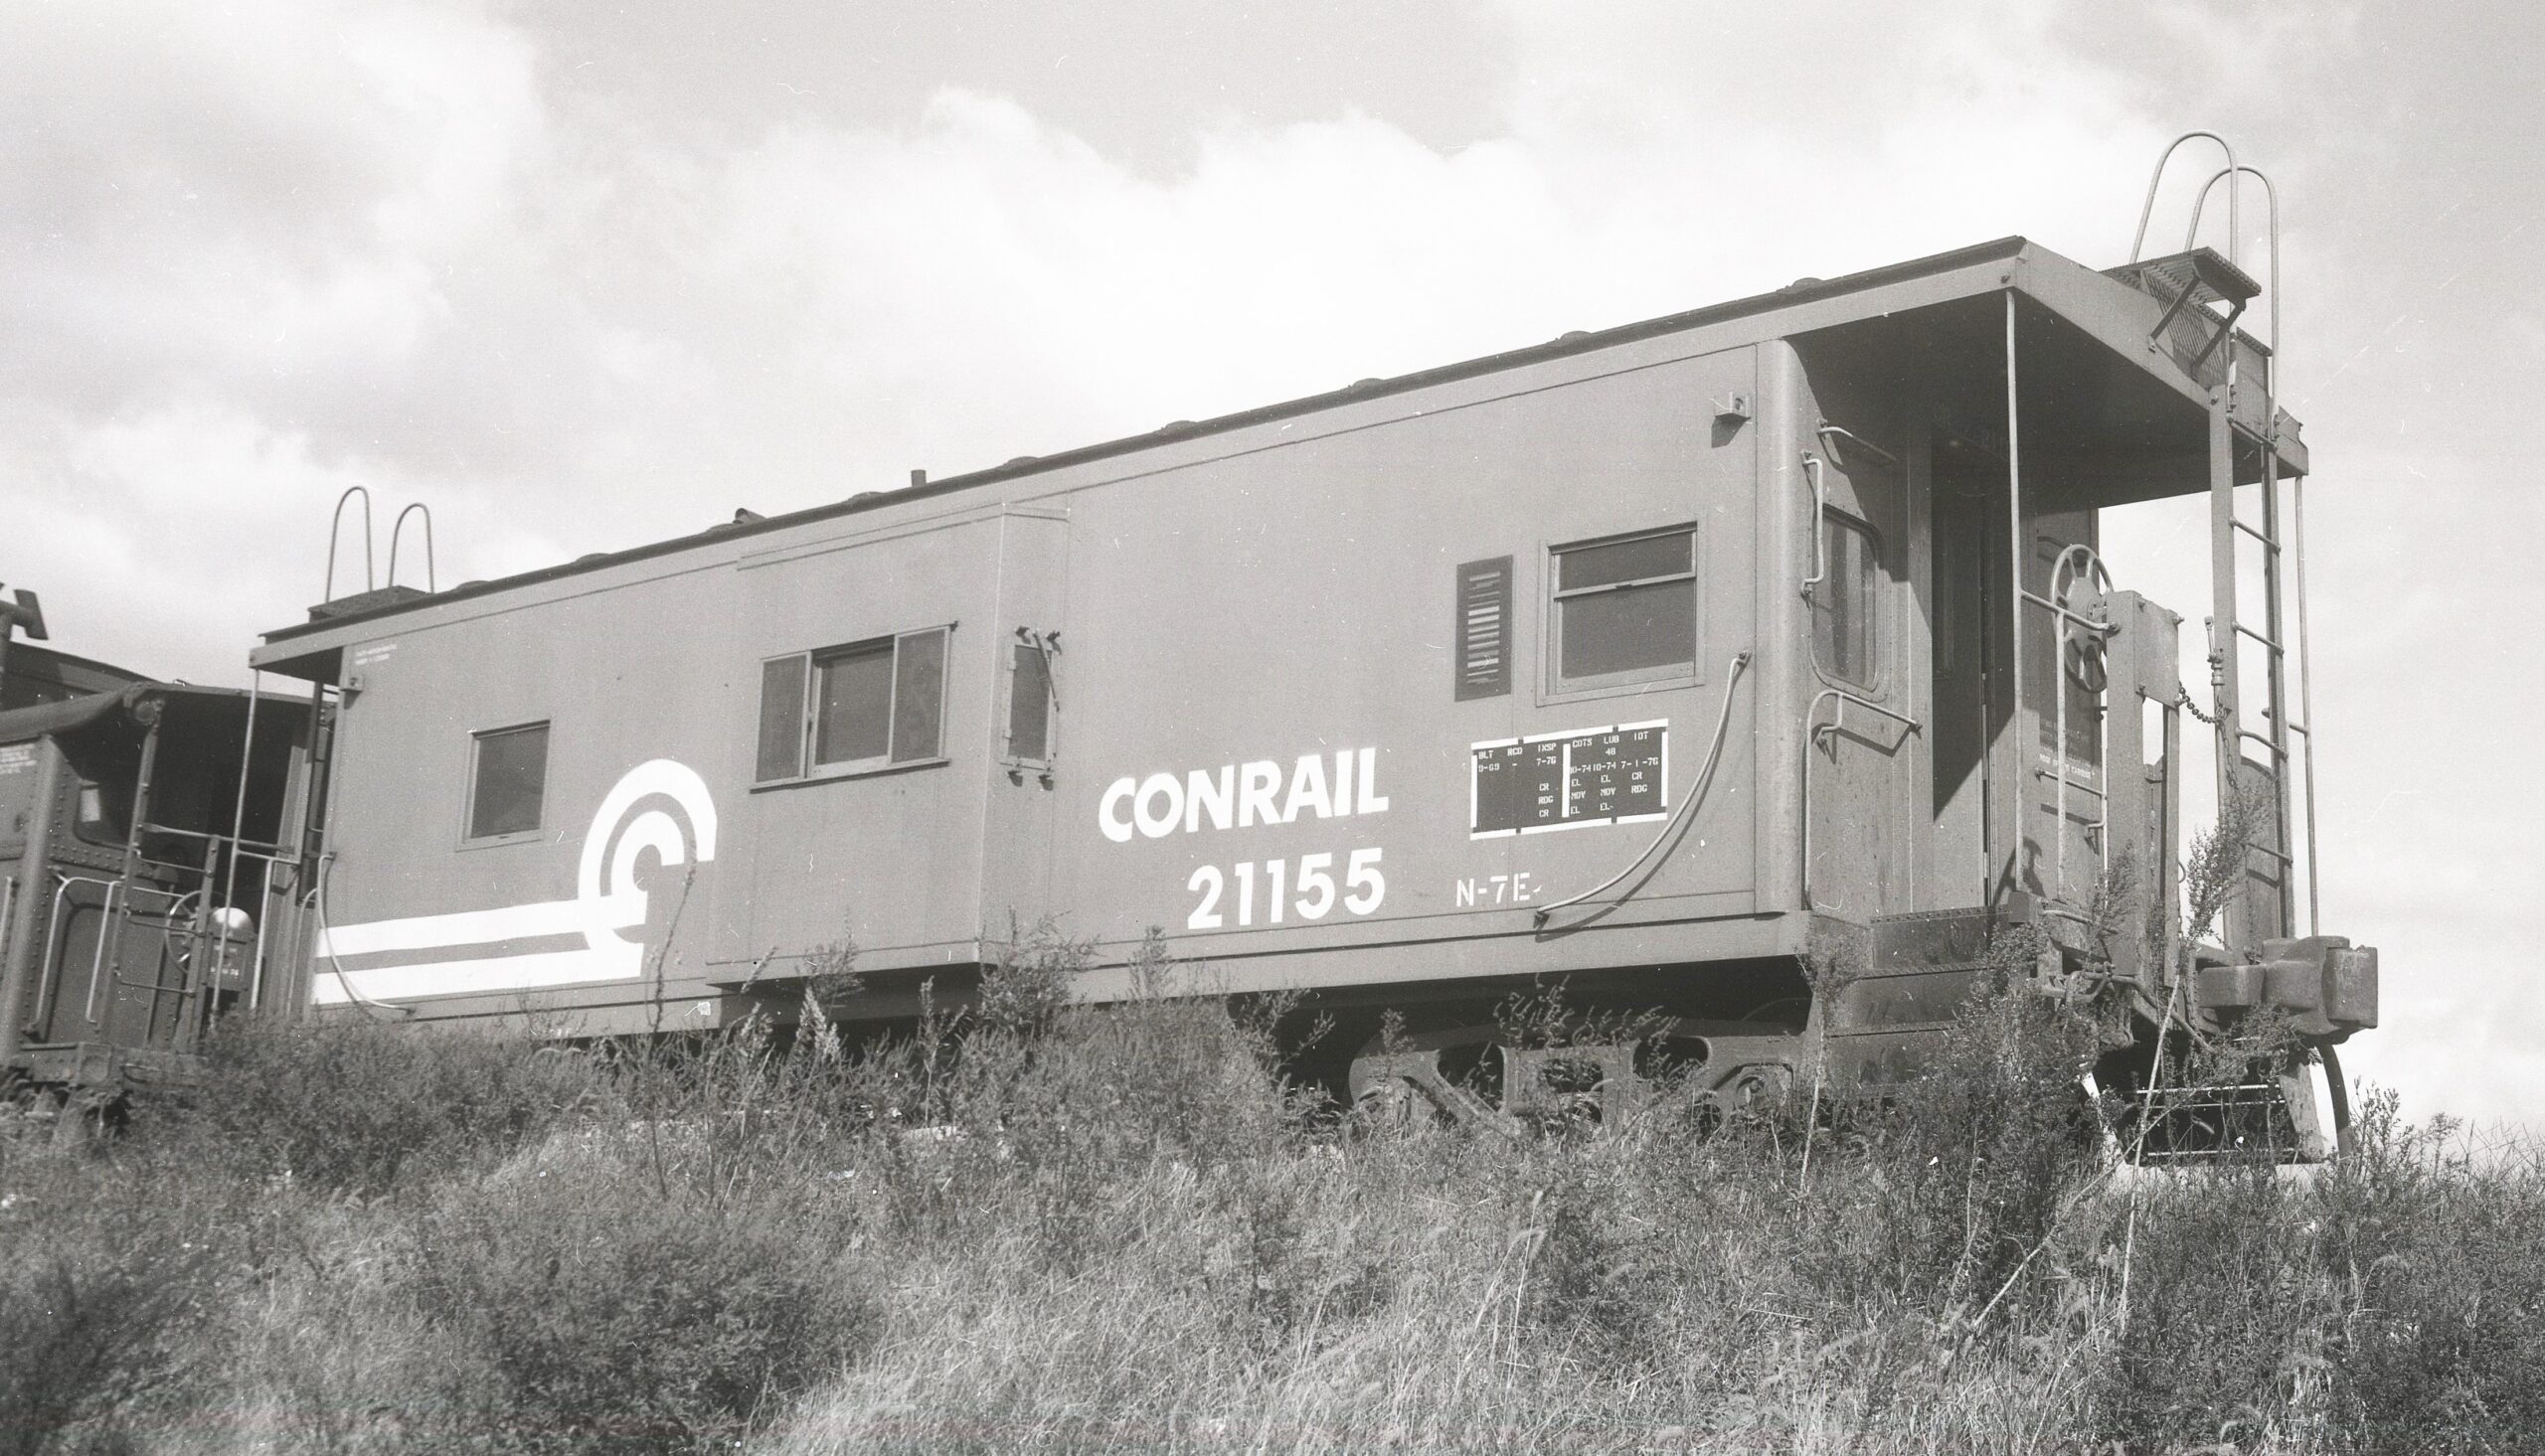 Conrail | Elizabethport, New Jersey | Class N7e caboose #21155 | October 15,1976 | H.B. Olsen photograph